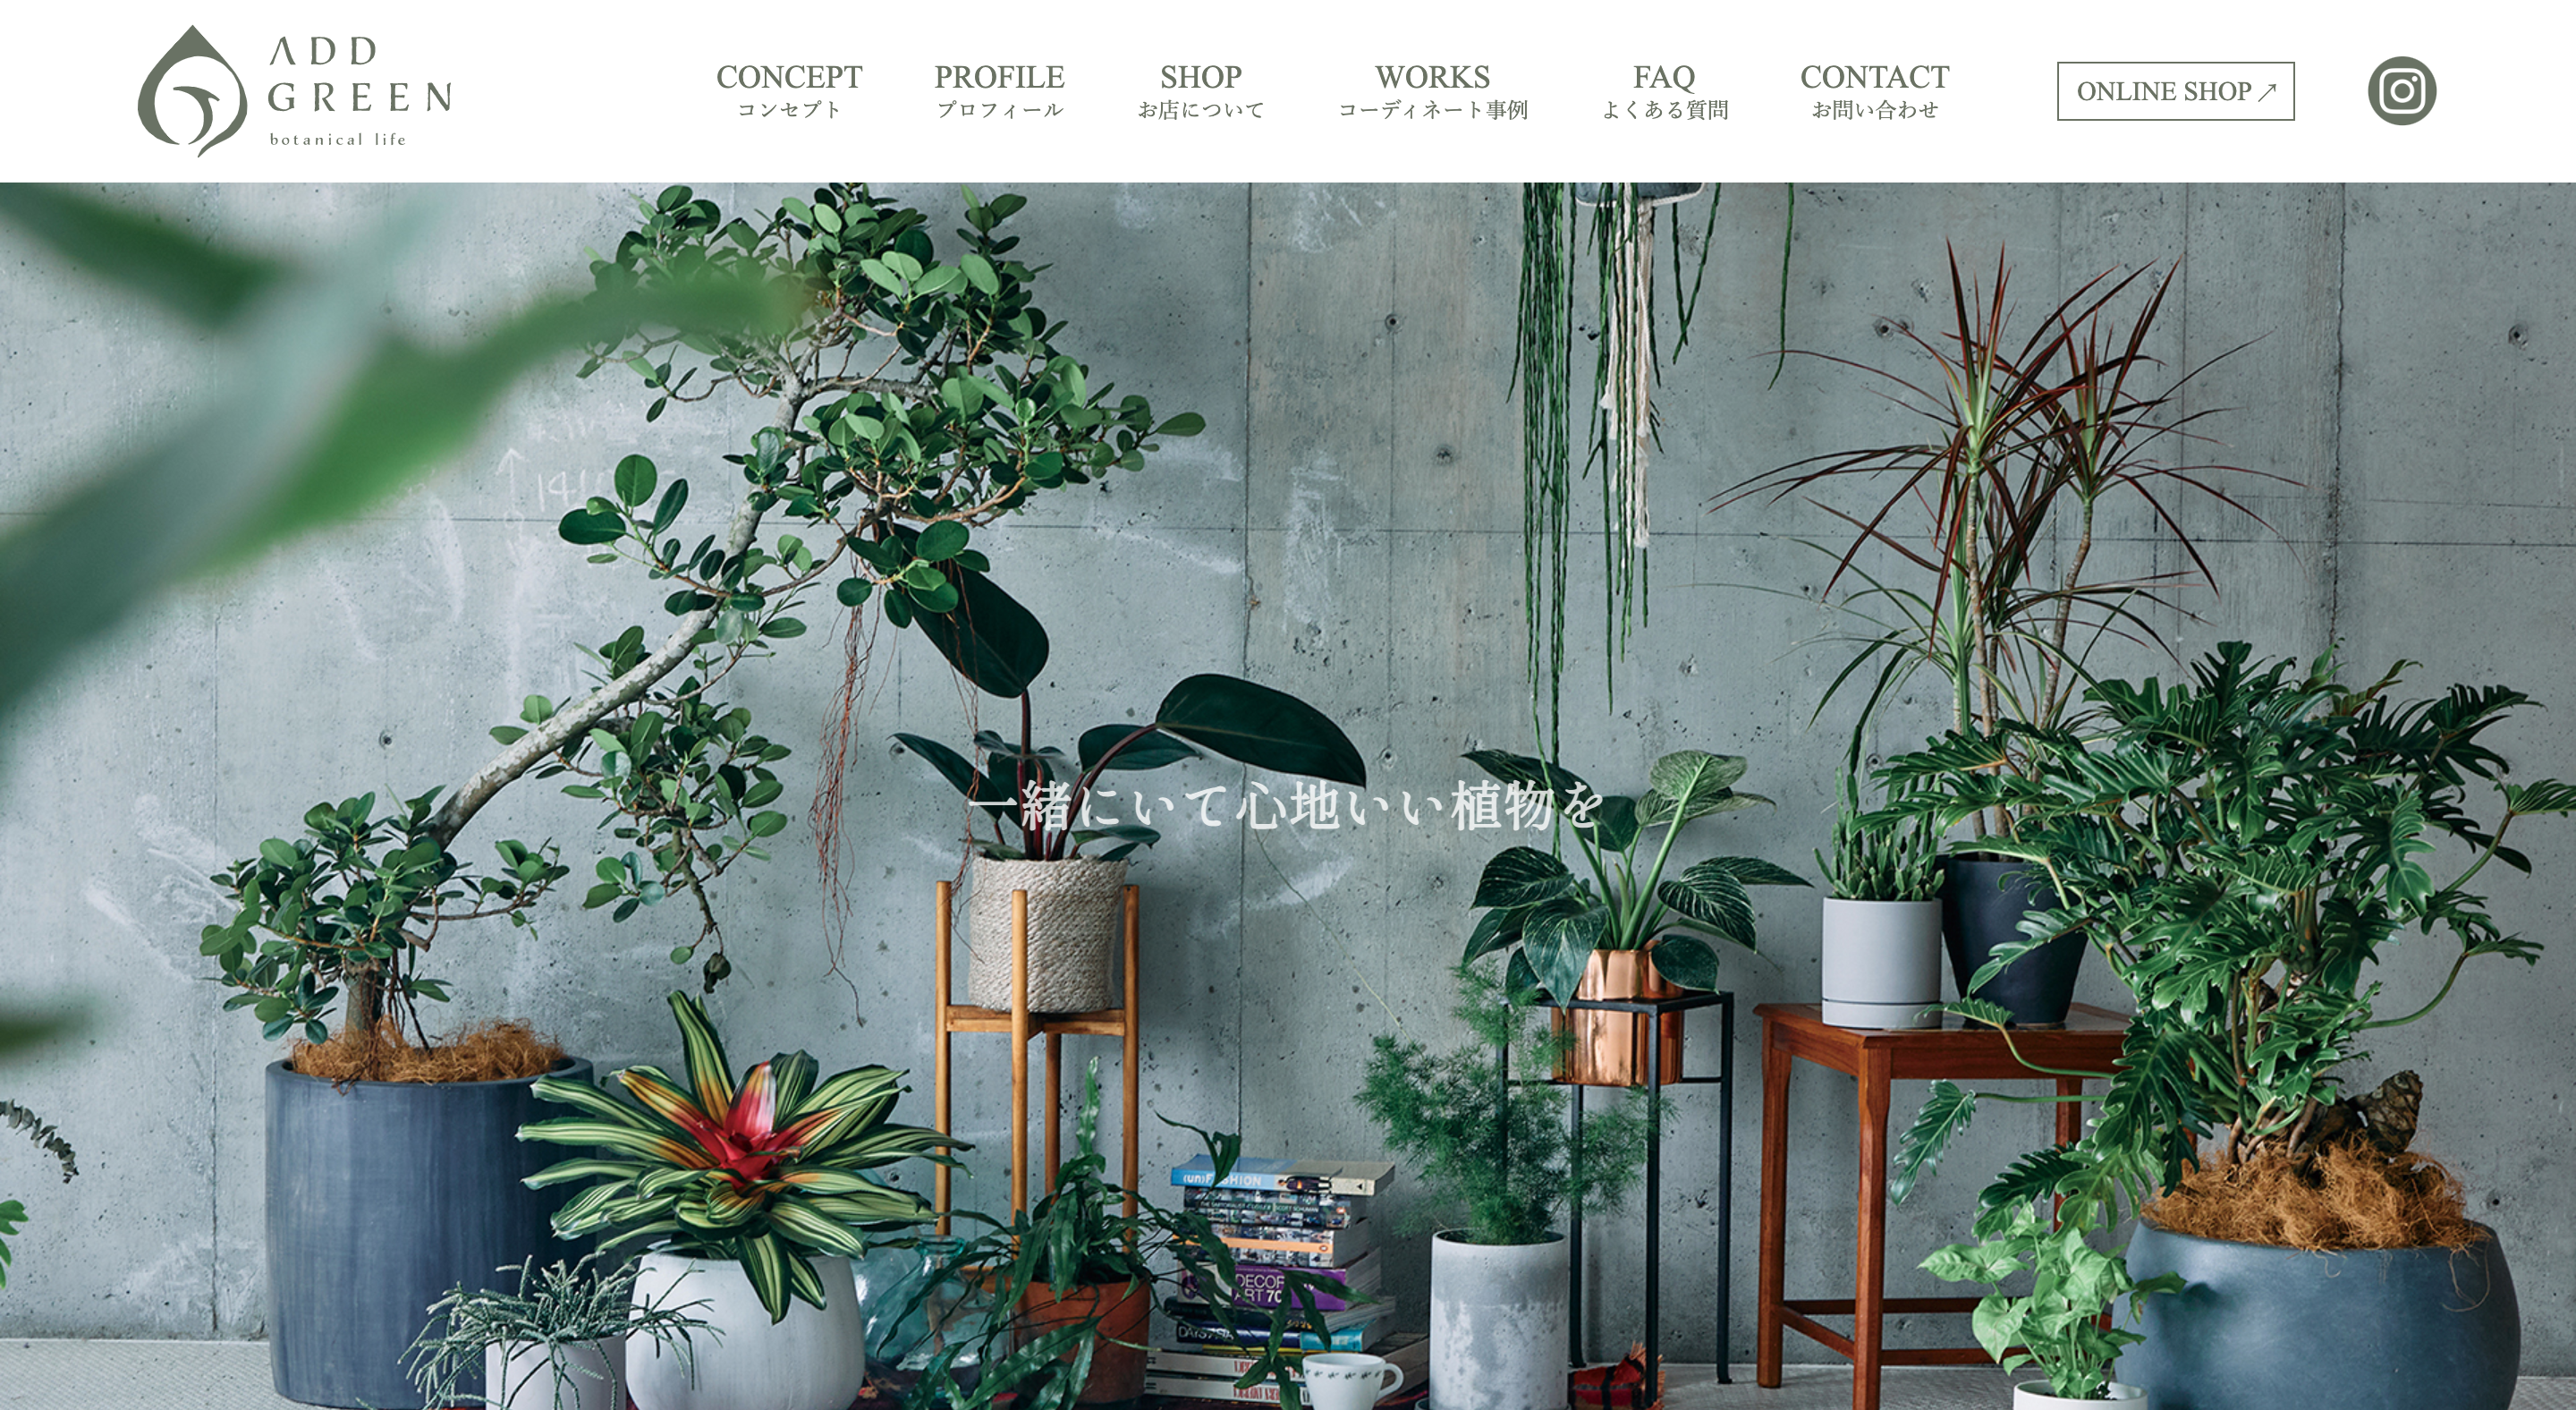 ADDGREEB botanical lifeのWEBサイトのTOP画面